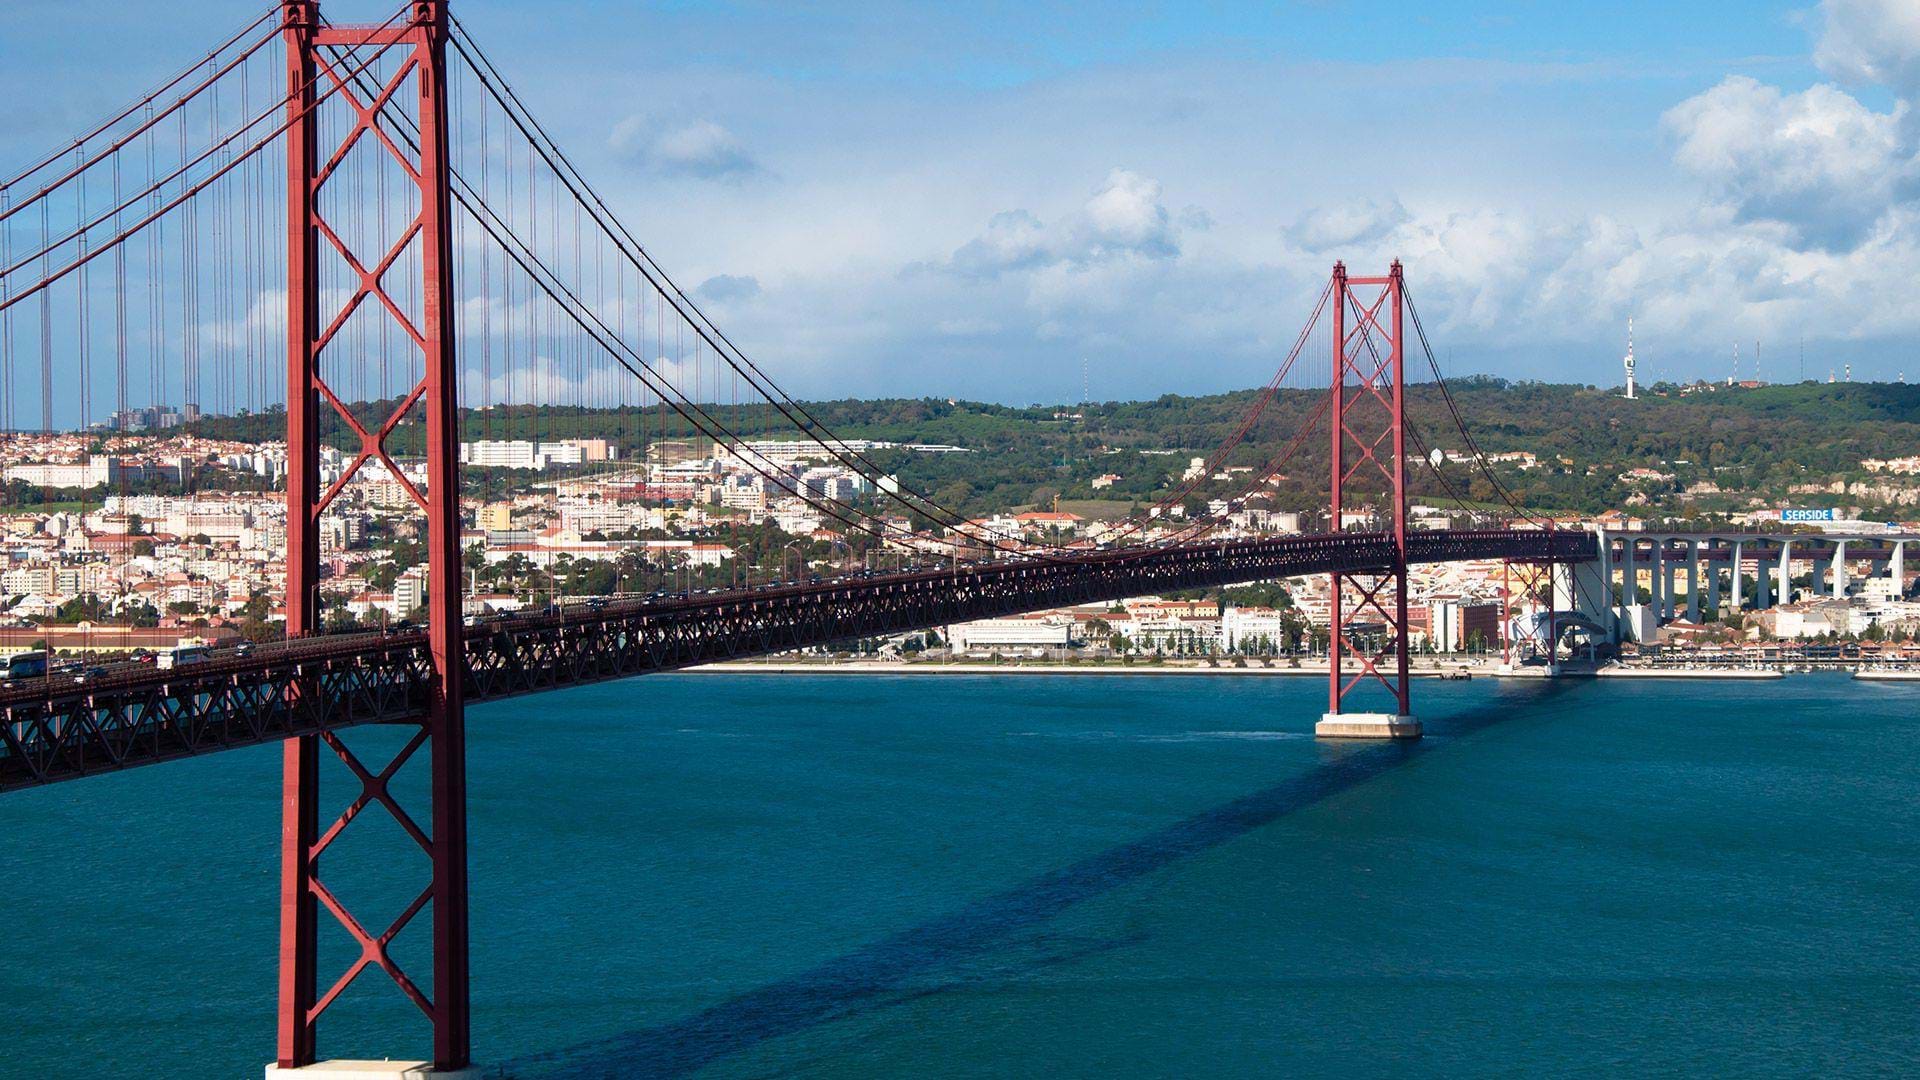 Lisbon - 25 of April bridge